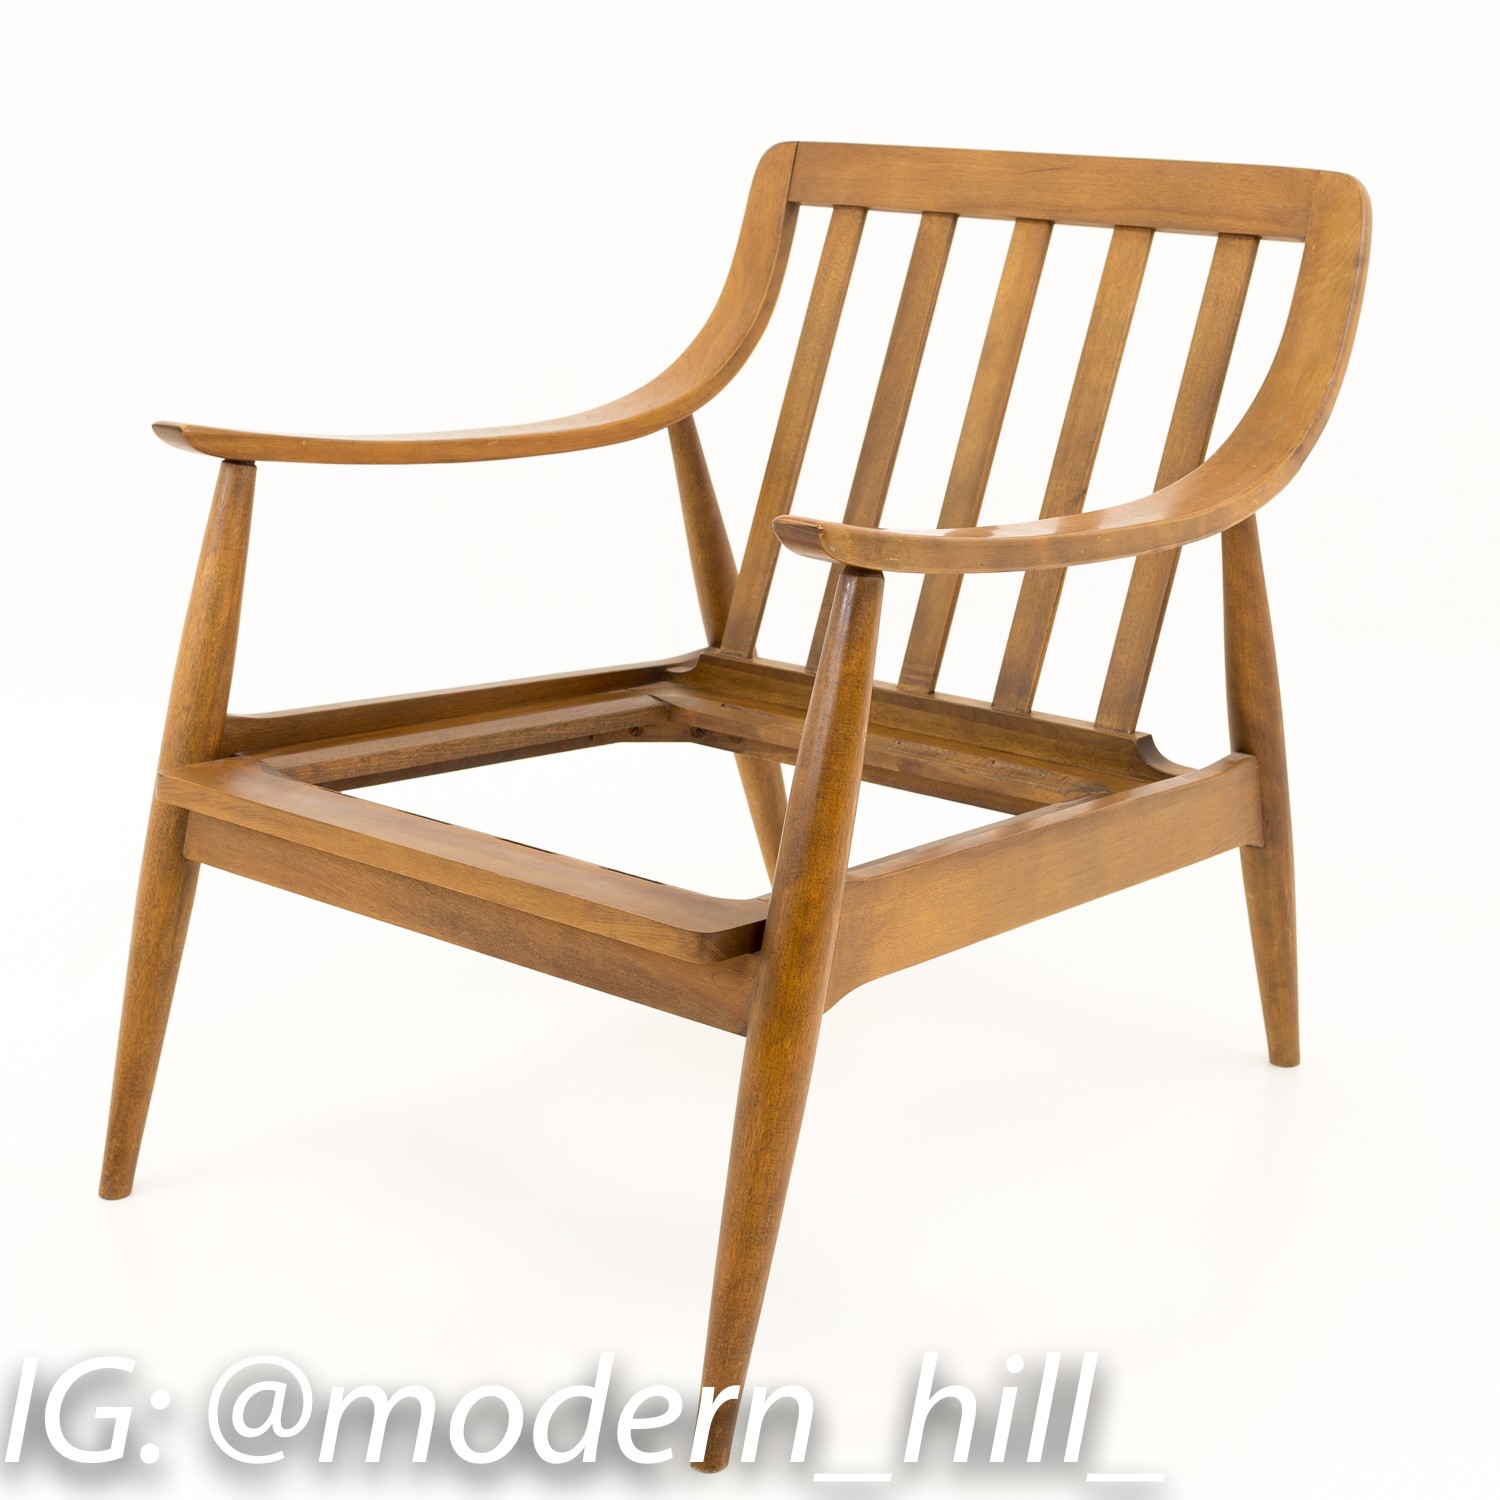 Peter Hvidt Style Mid Century Modern Chair Frame